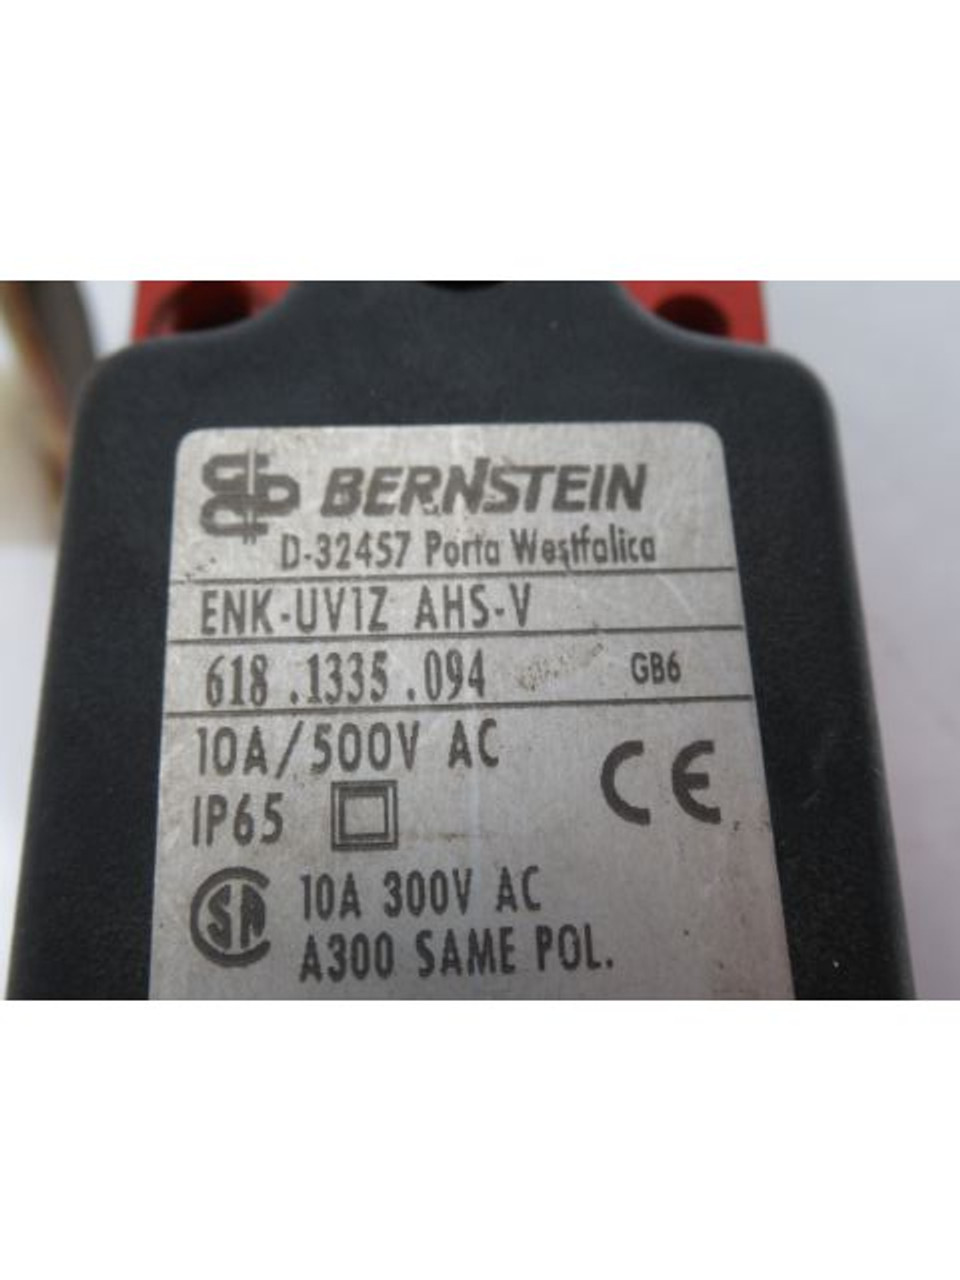 Bernstein 618.1335.094 Limit Switch w/Offset Roller 10A@500VAC USED